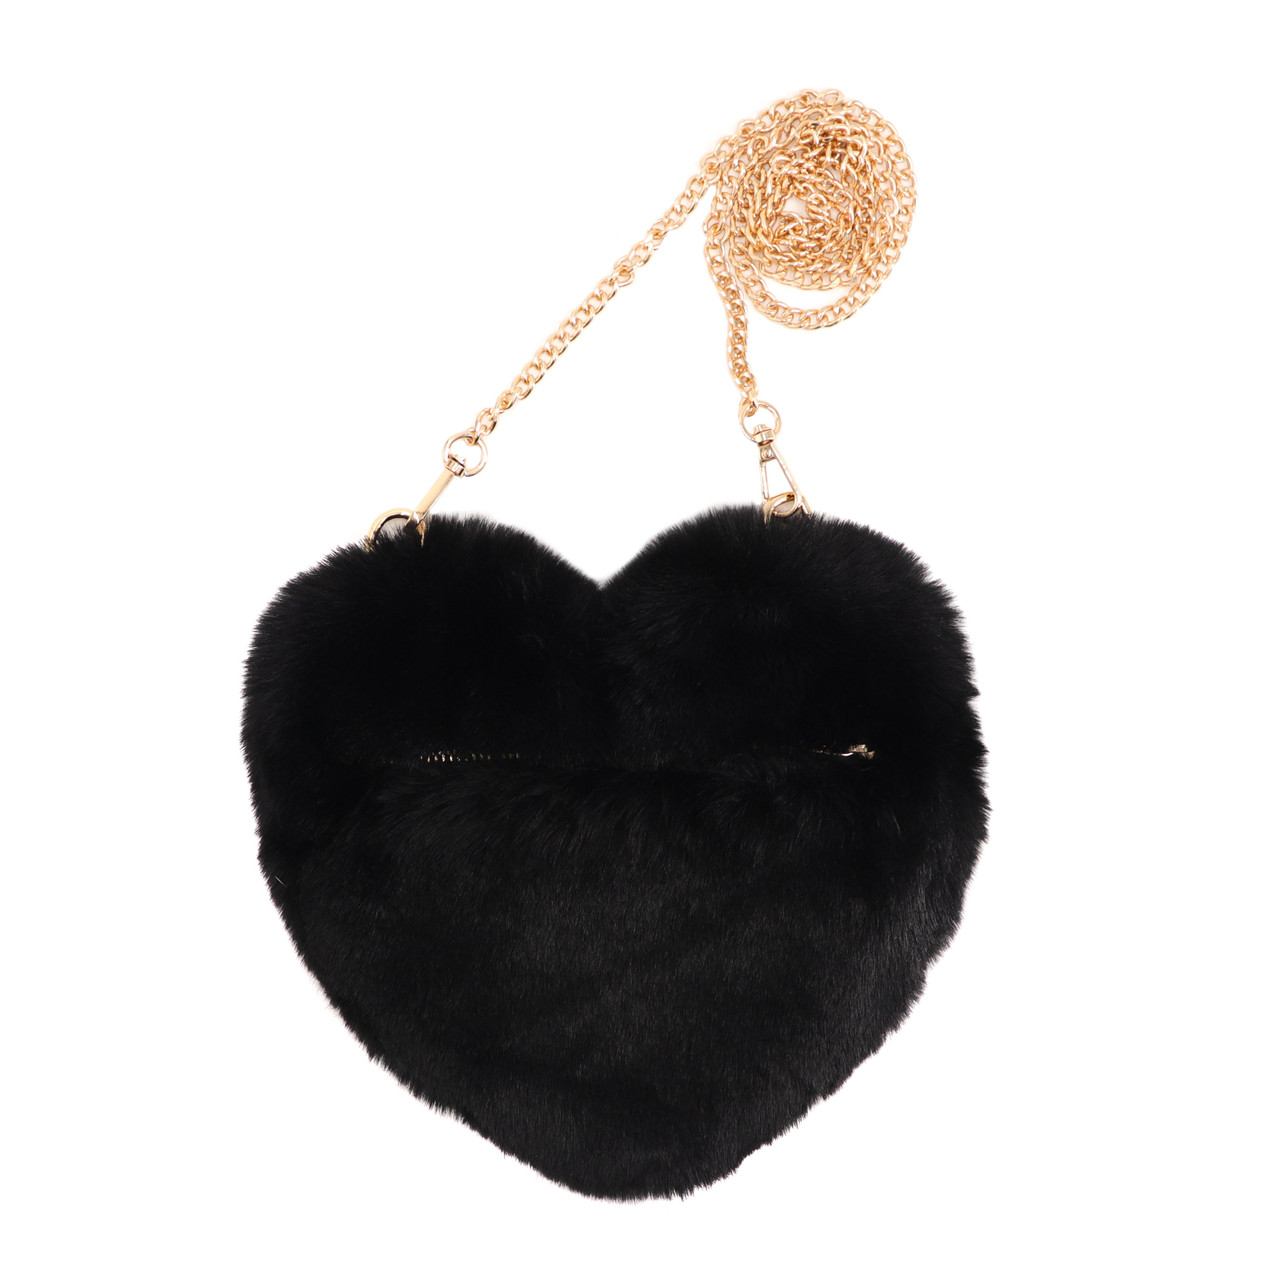 Black Heart Shaped Bag, Black Heart Shaped Pouch